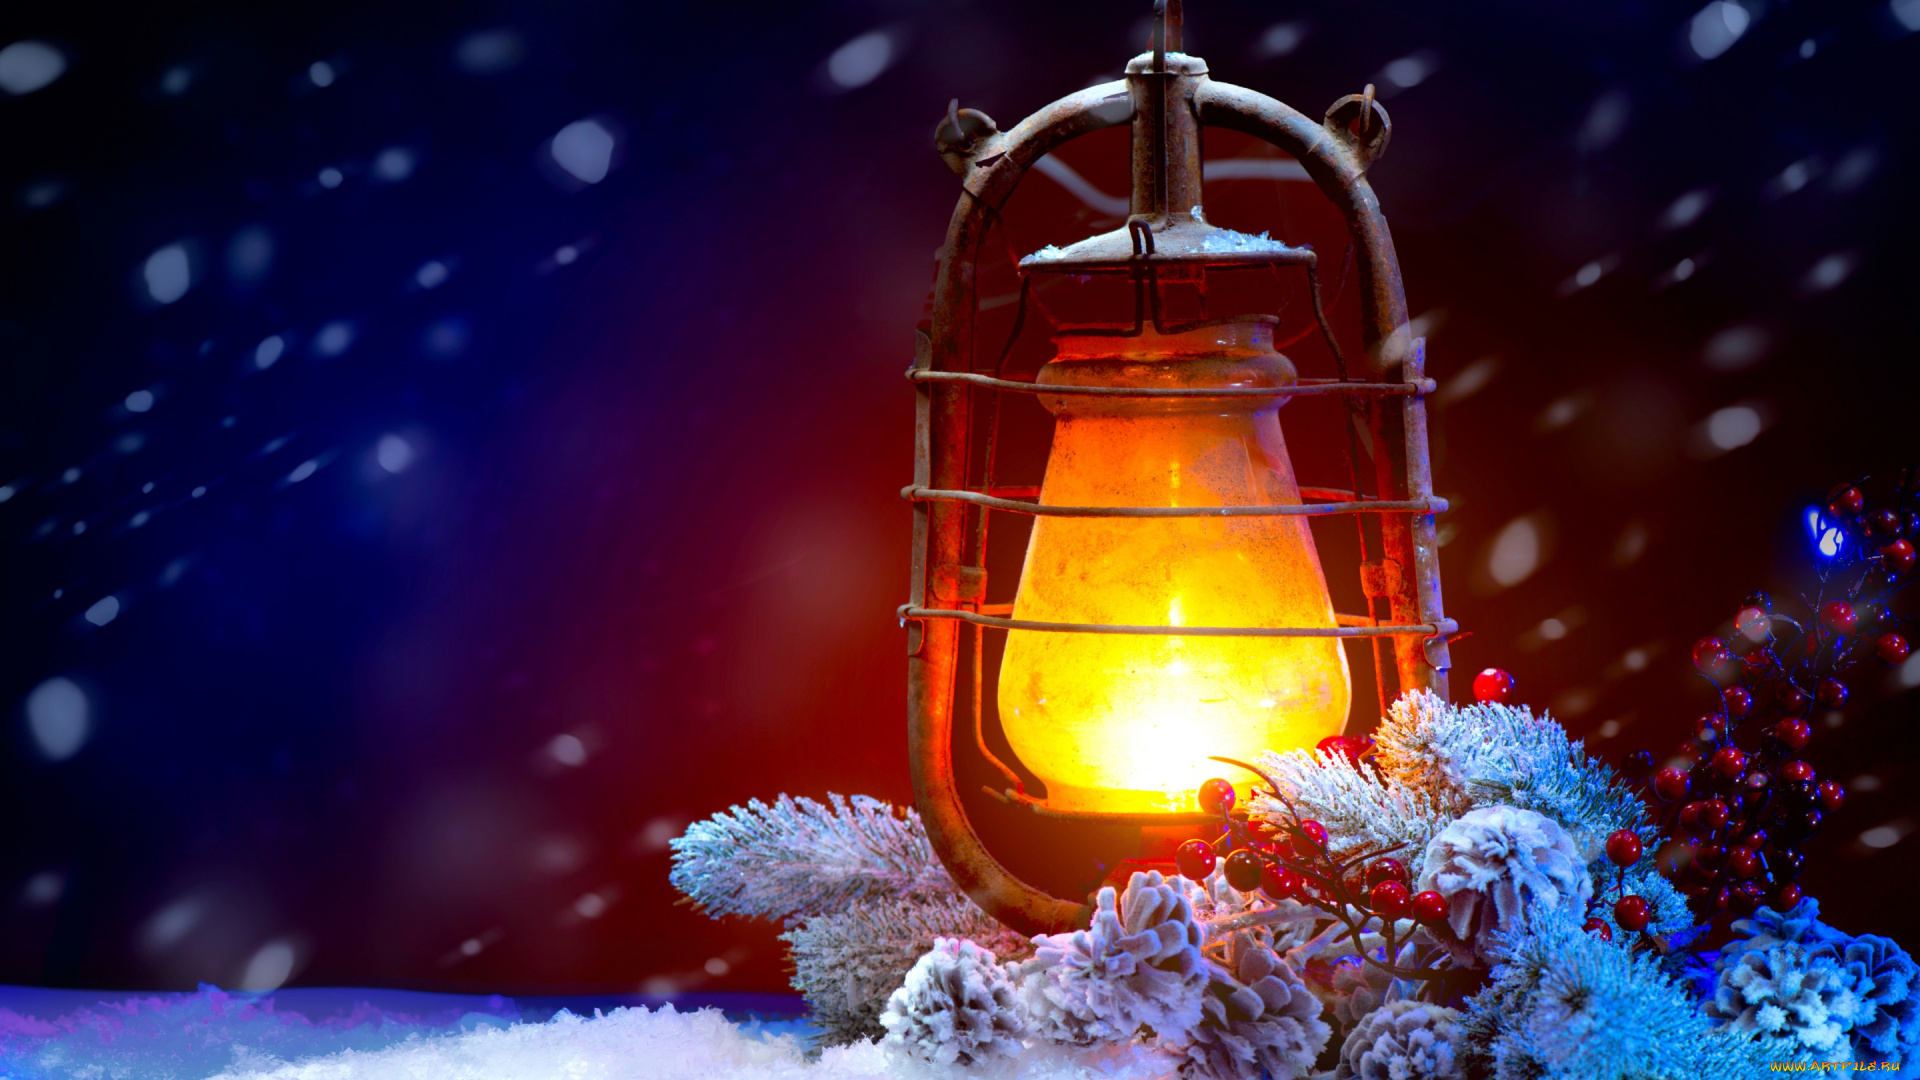 праздничные, -, разное, , новый, год, клонка, фонарь, пламя, реколта, сняг, светлина, лампа, бор, twig, vintage, snow, light, lamp, pine, tree, lantern, flame, merry, christmas, happy, new, year, holiday, decoration